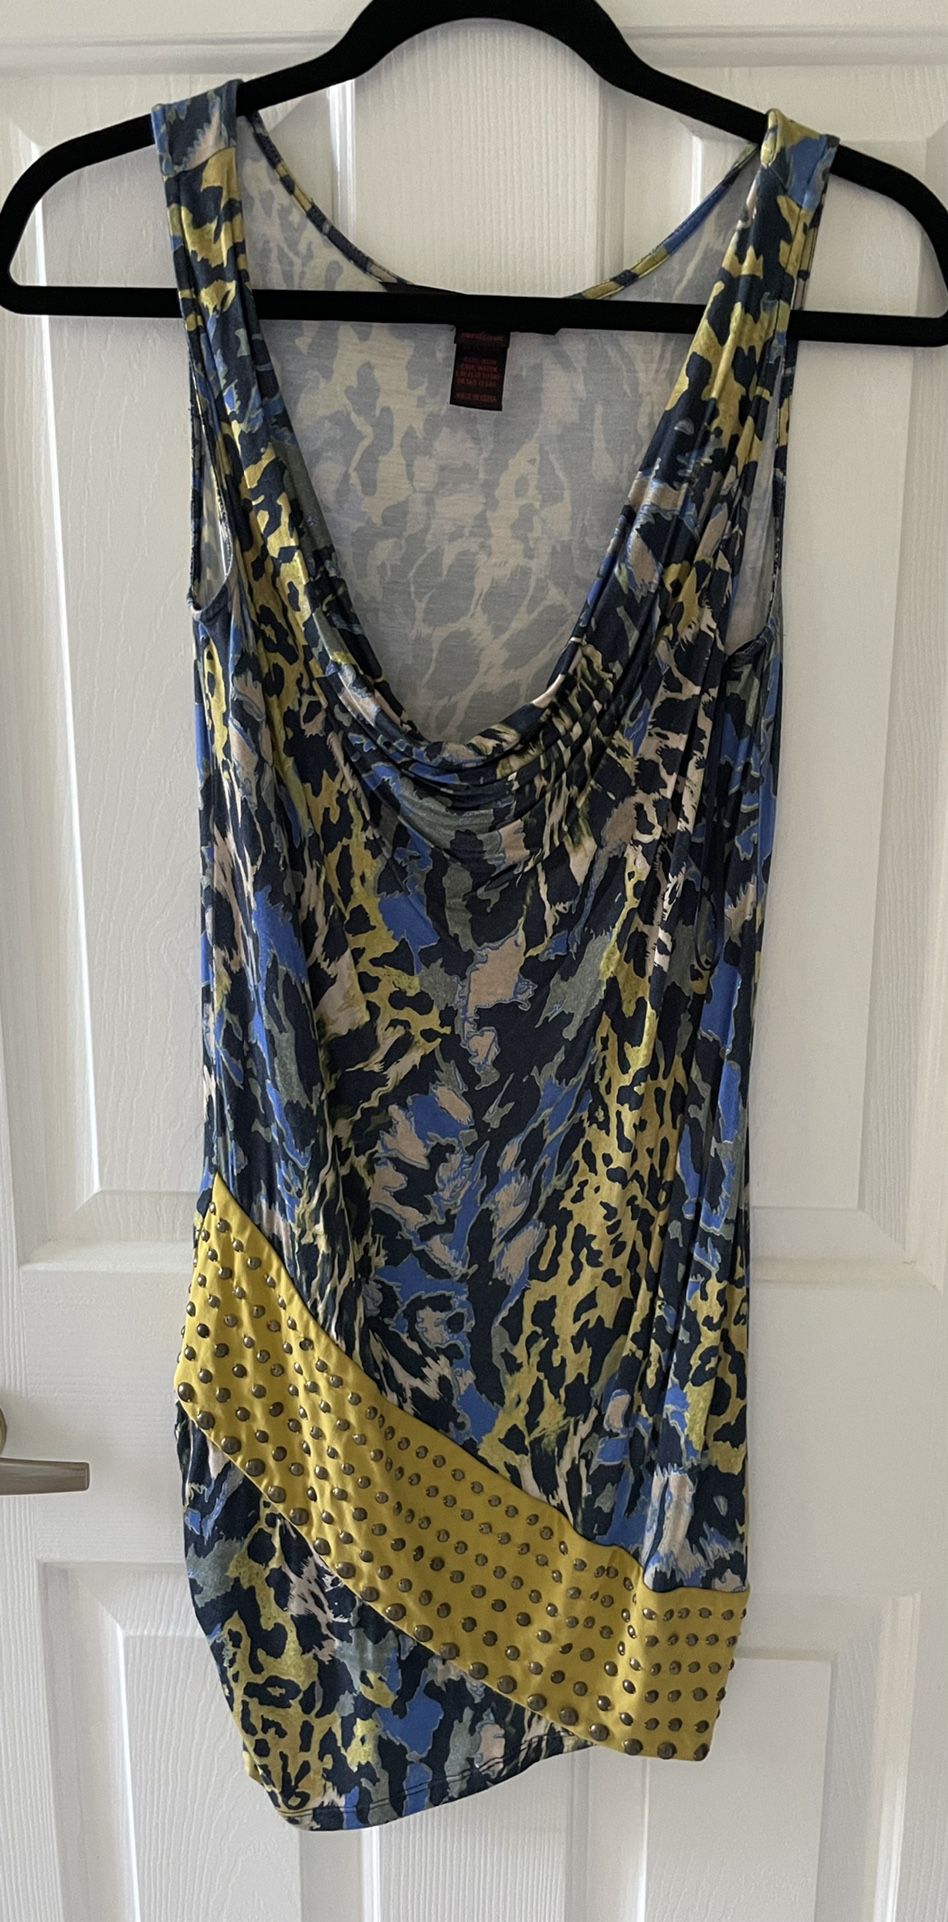 Kimikal Mini Dress, Mixed Blues And Yellows With Studs Details. Medium 